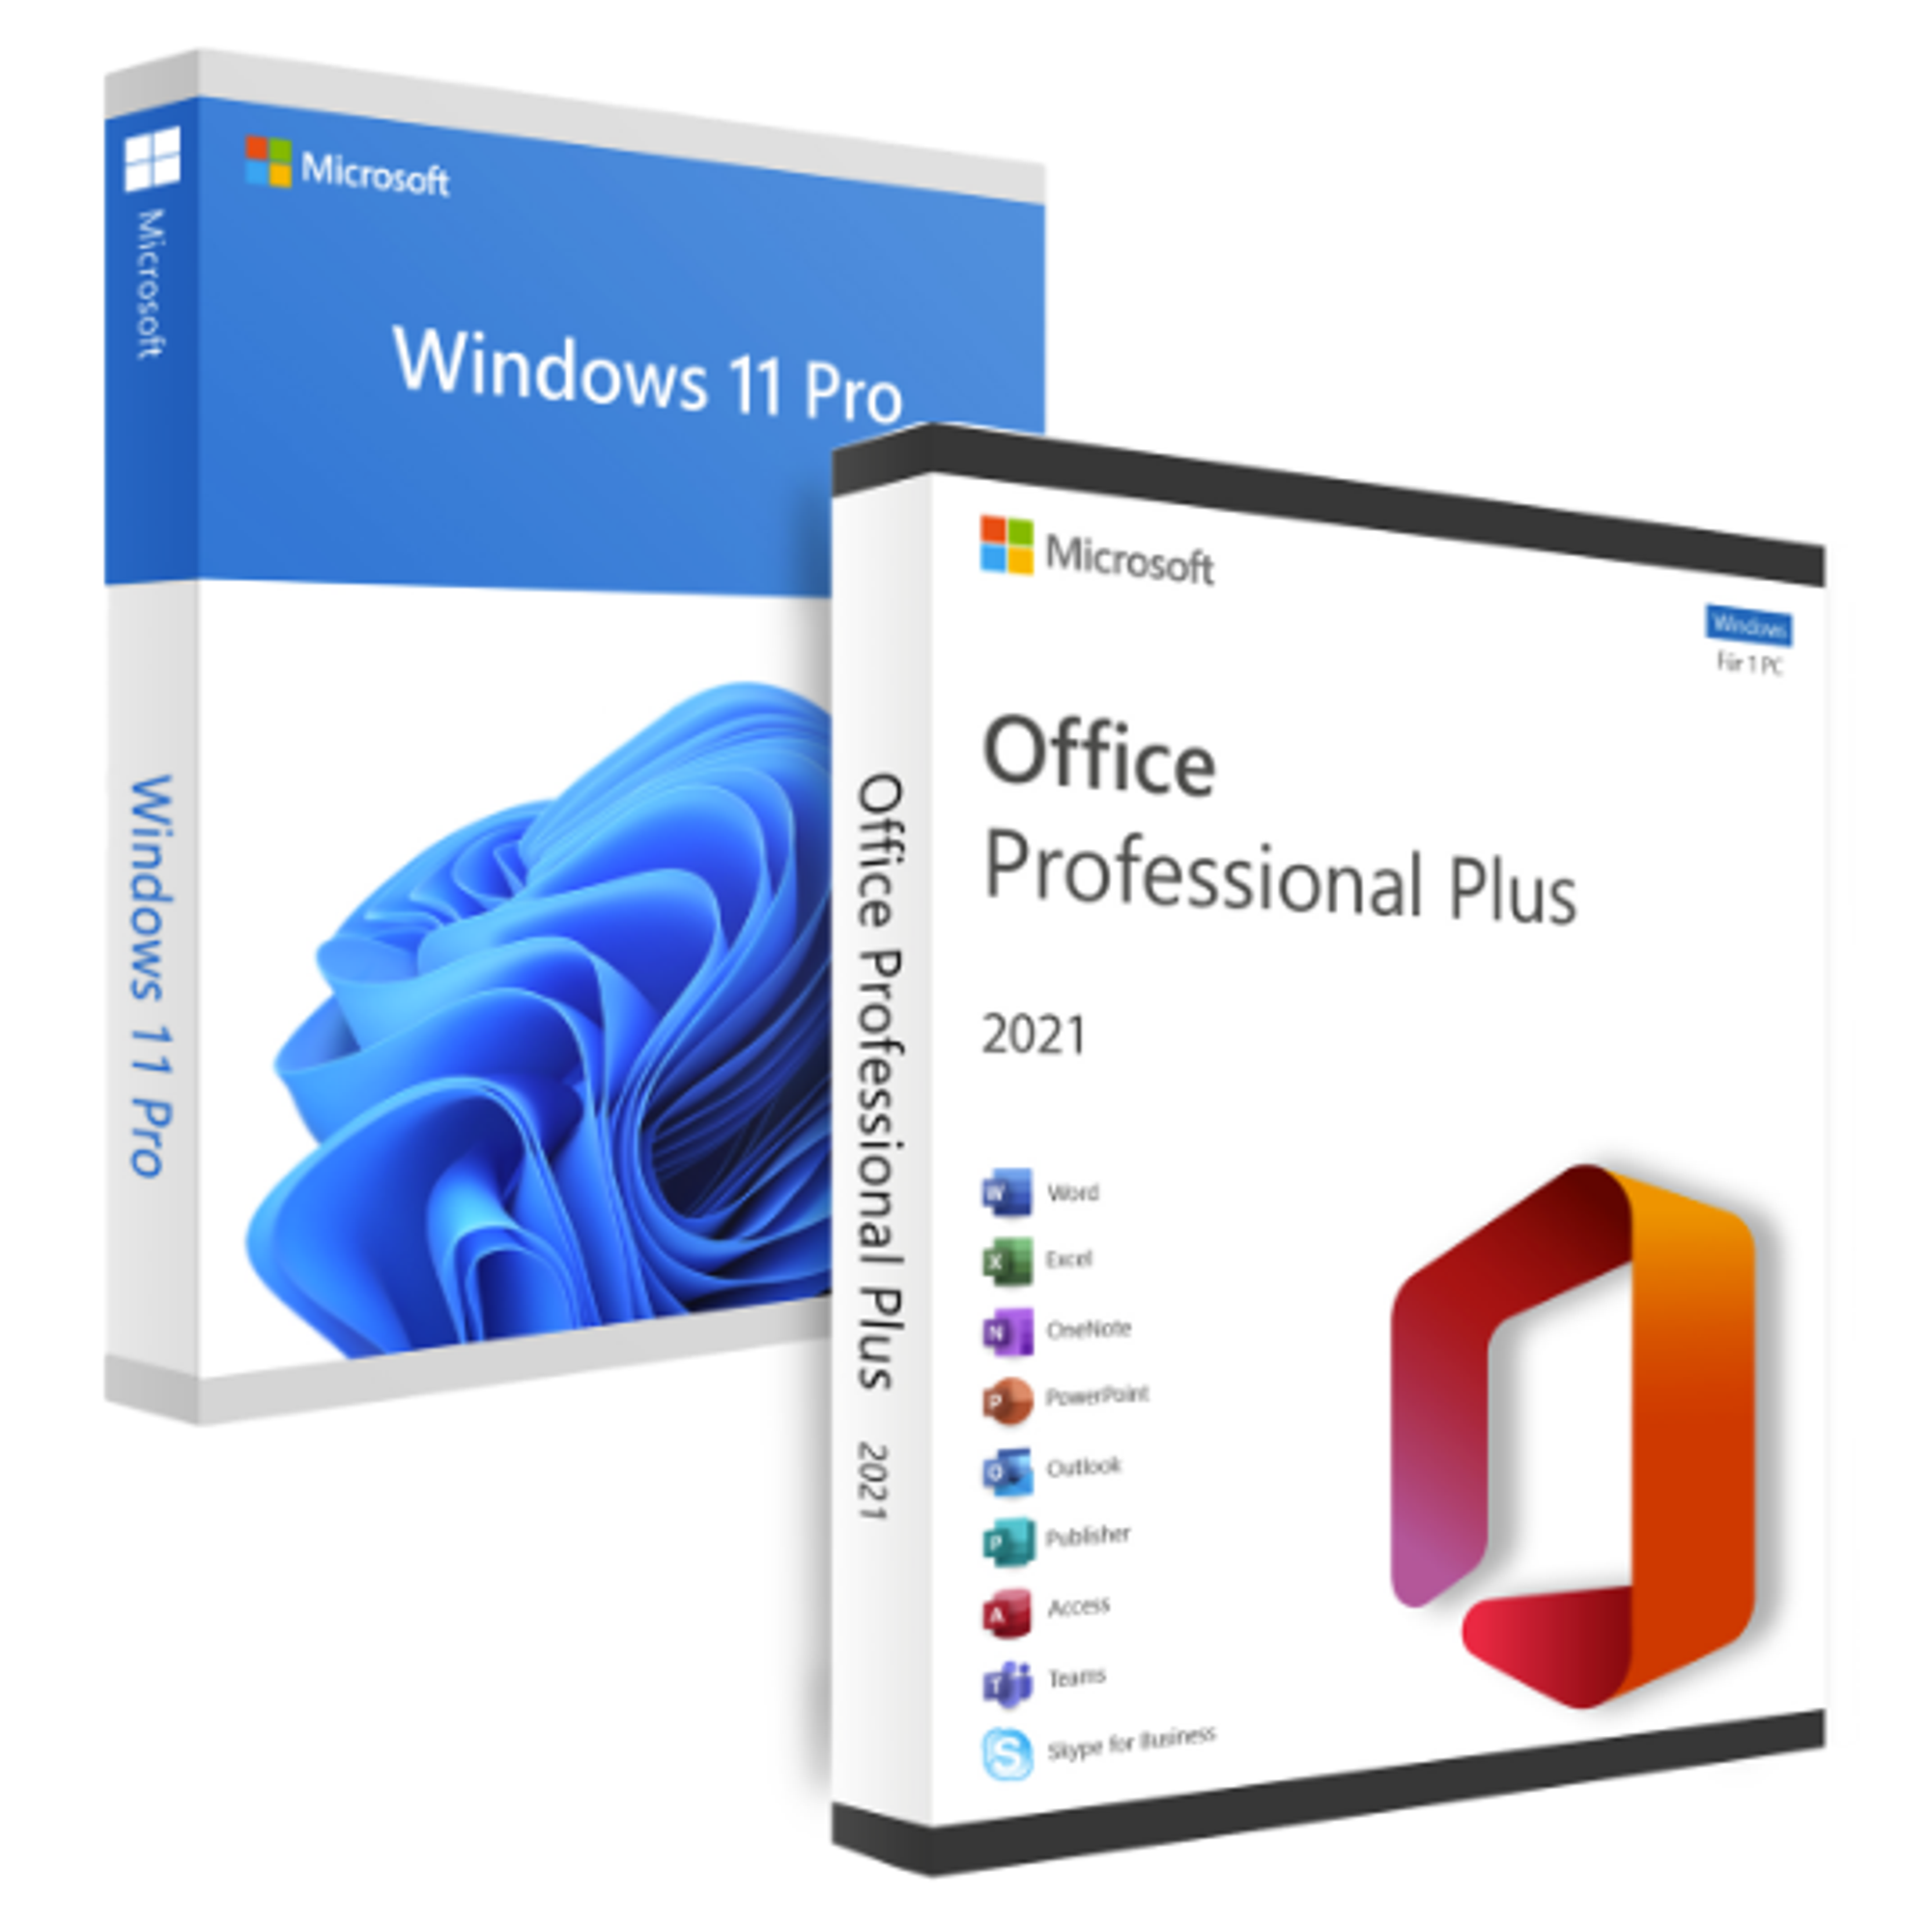 Microsoft Windows 11 Pro and Office 2021 DVD 64 BIT | Walmart Canada